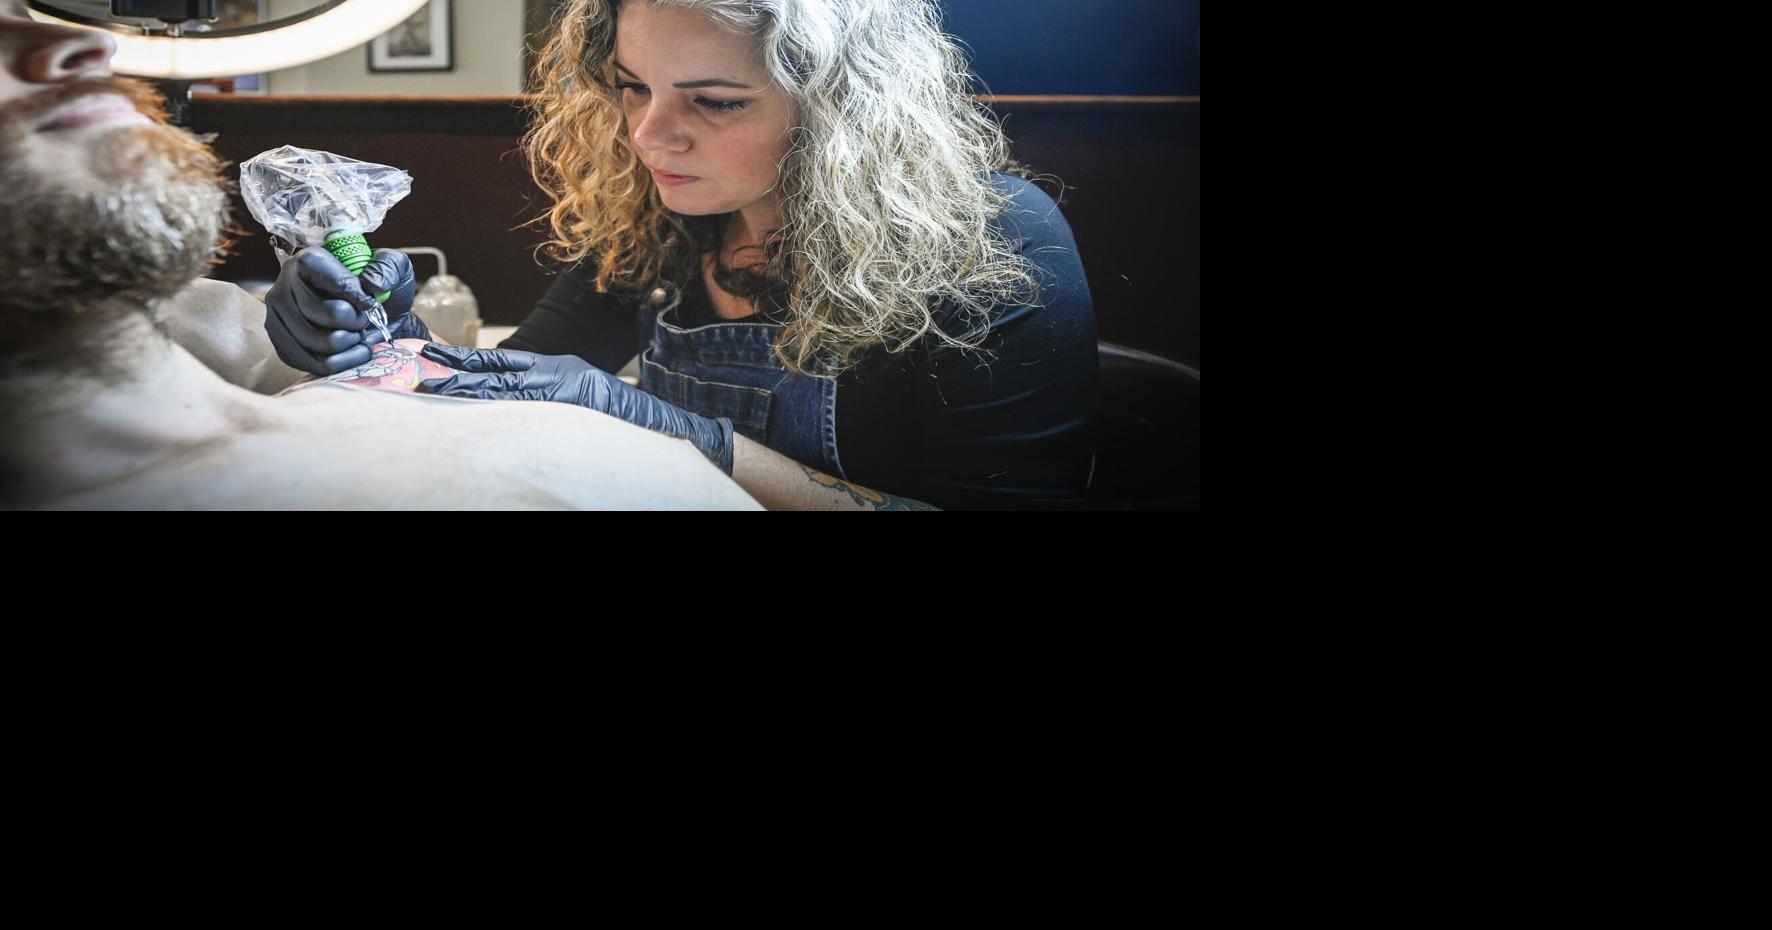 Local tattoo artist ties ink to emotional healing